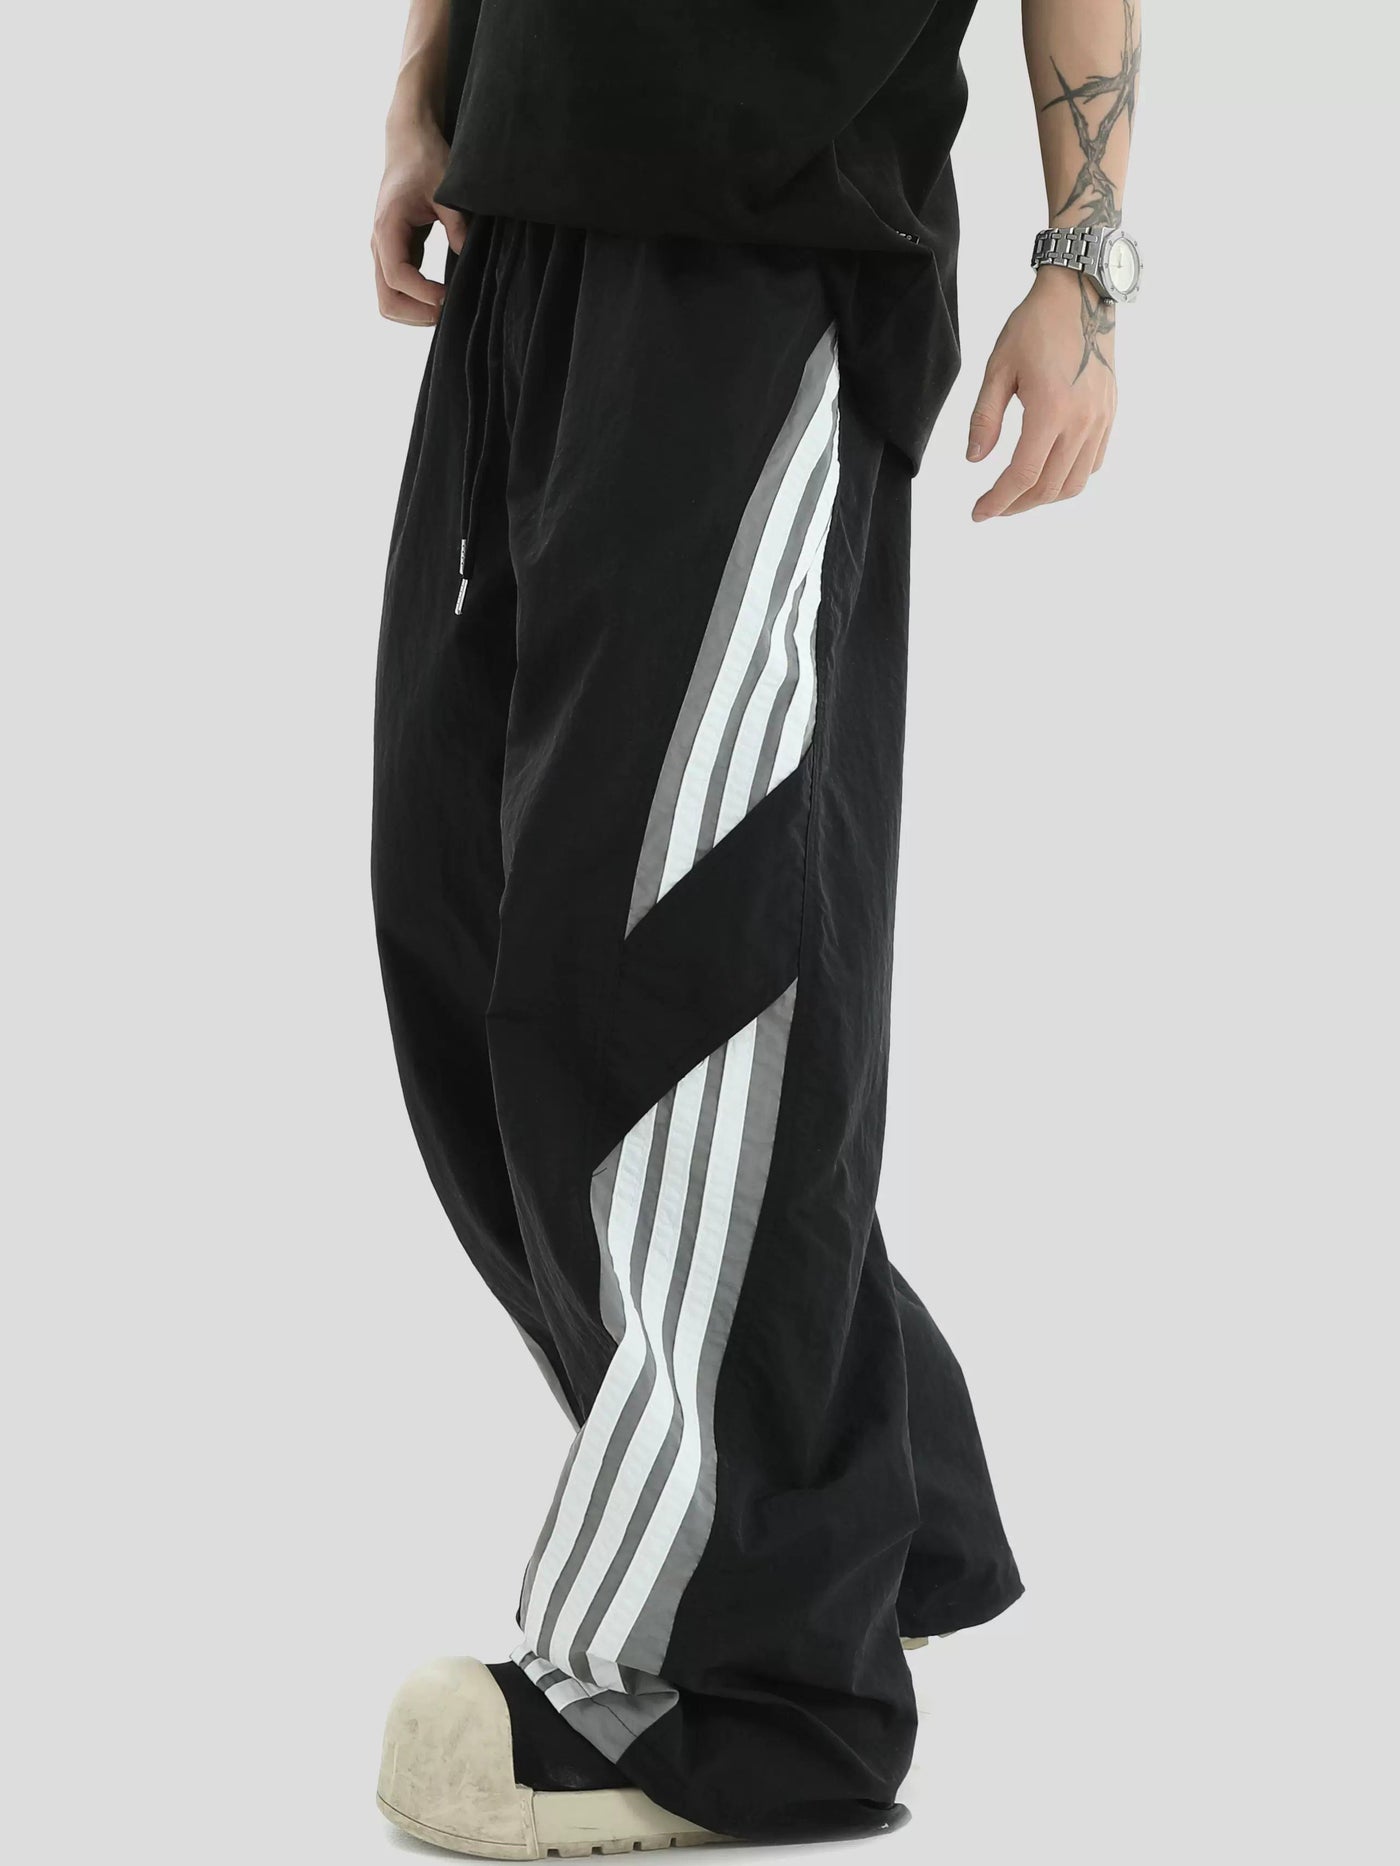 Striped Side Track Pants Korean Street Fashion Pants By INS Korea Shop Online at OH Vault